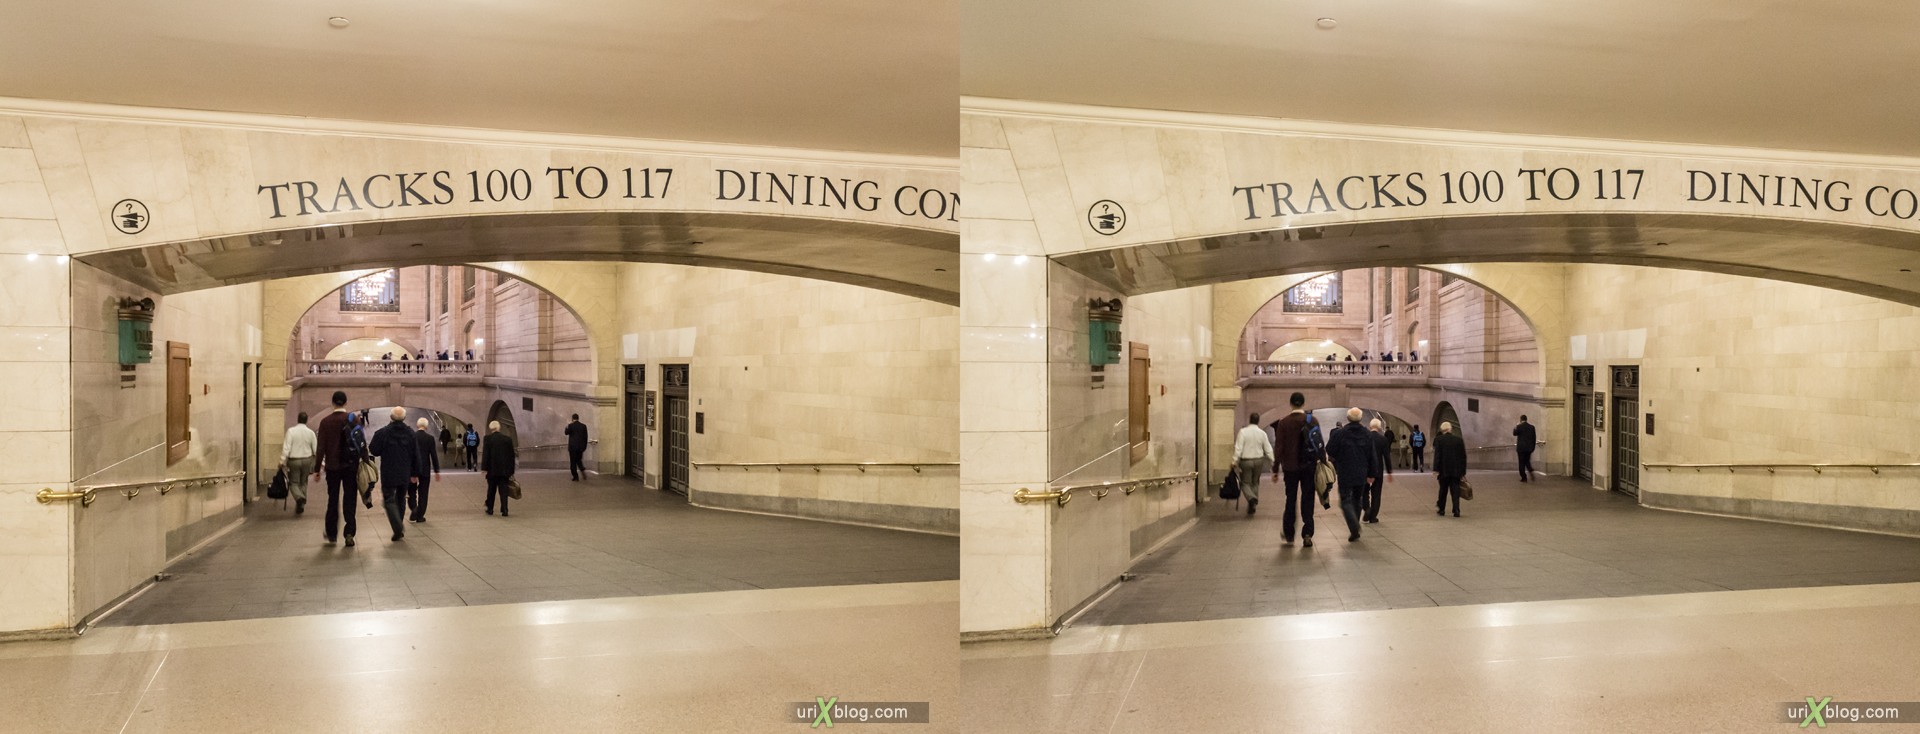 2013, Grand Central Terminal, Нью-Йорк, США, 3D, перекрёстные стереопары, стерео, стереопара, стереопары